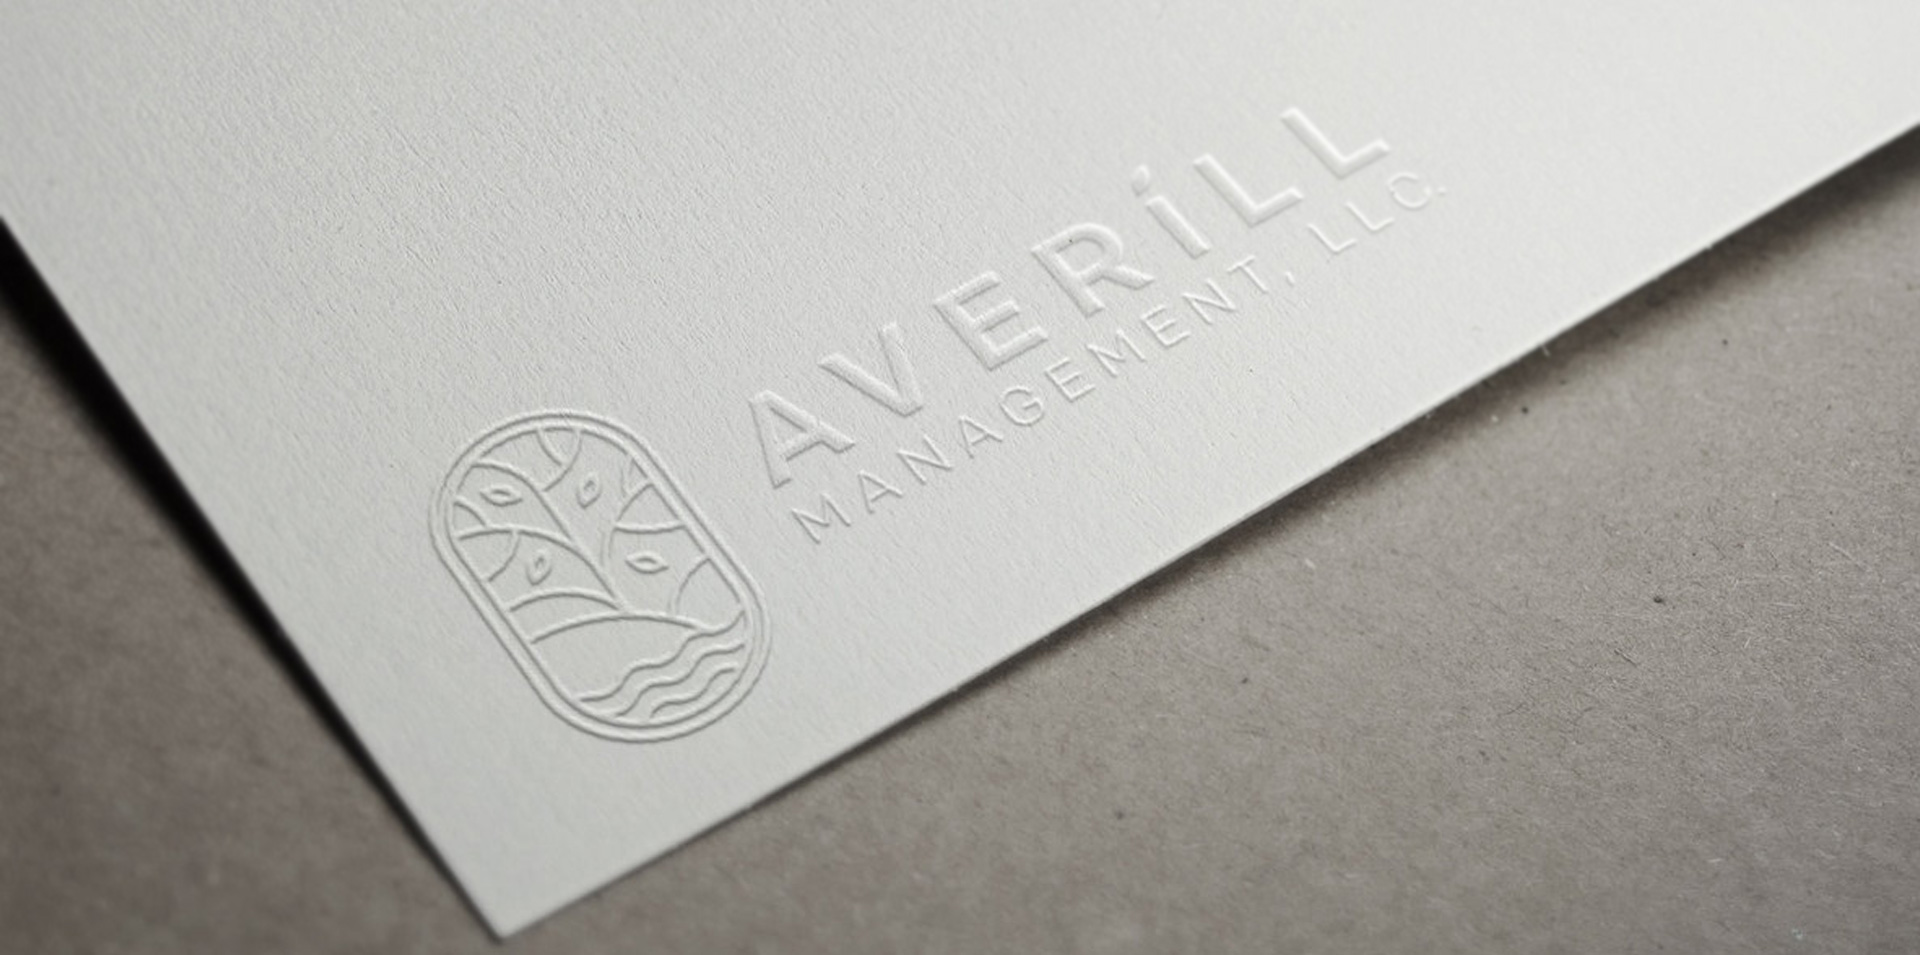 Averill management LLC.